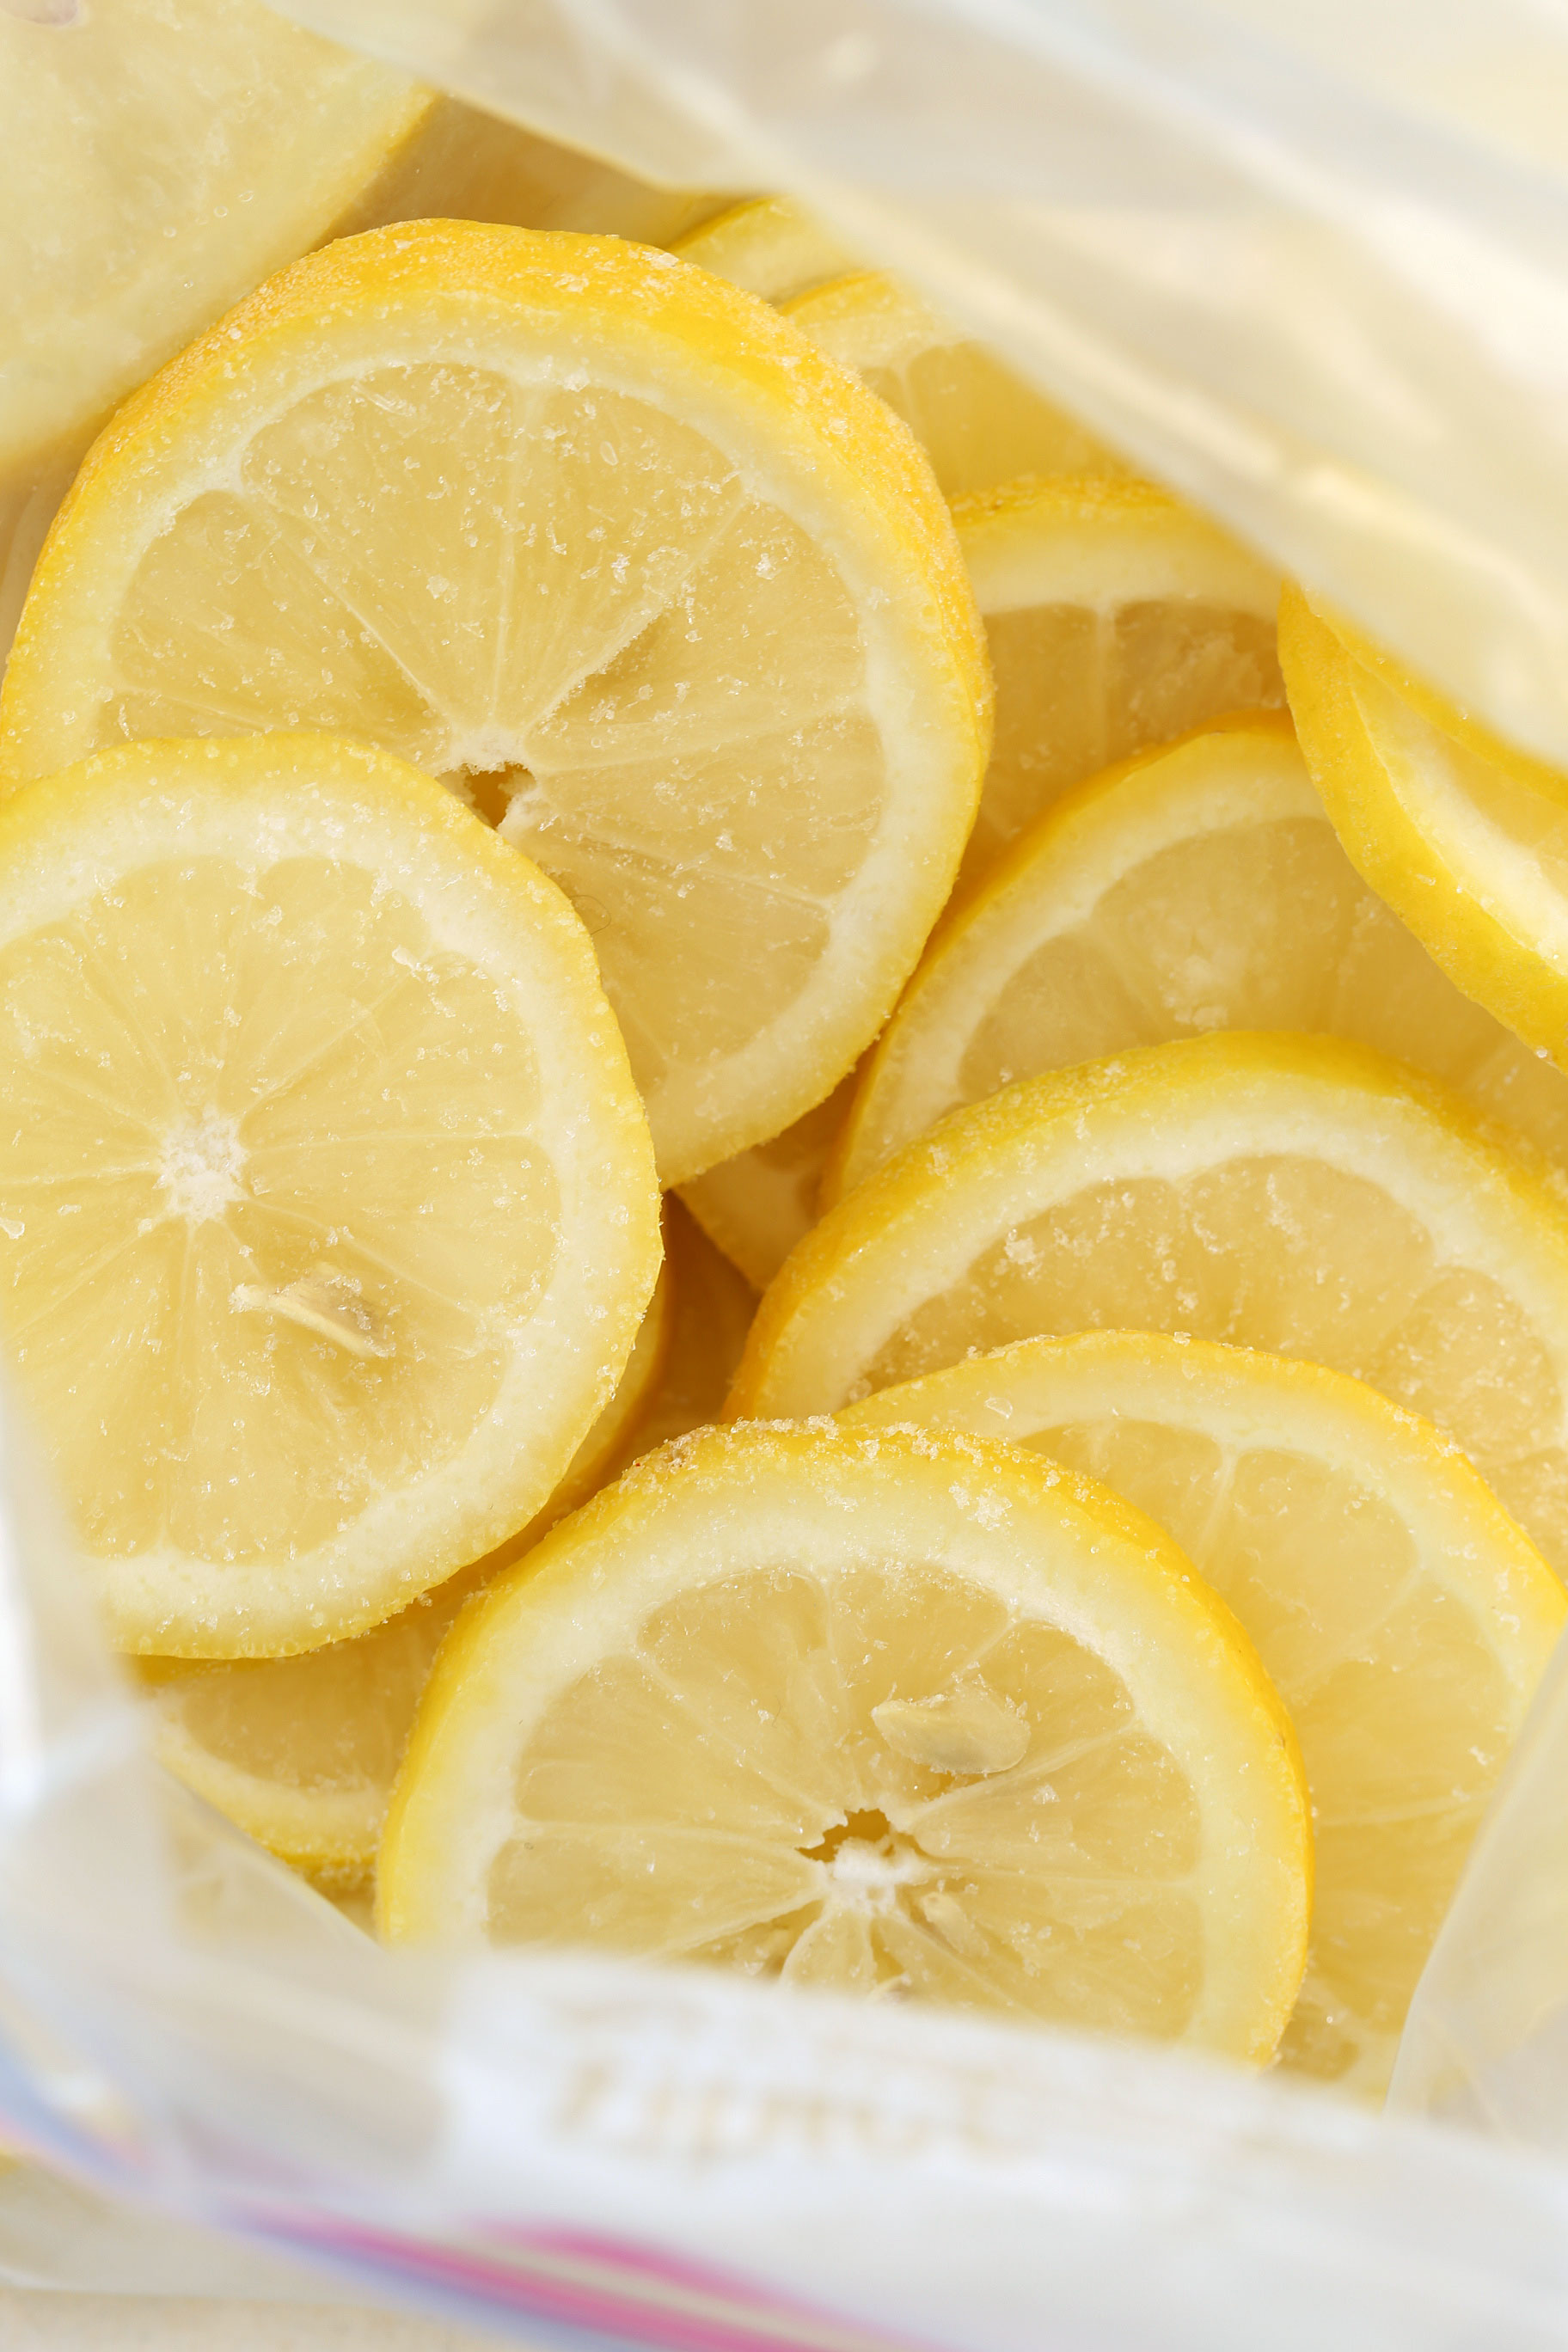 Alkalizing Frozen Lemon Slices - The Harvest Kitchen